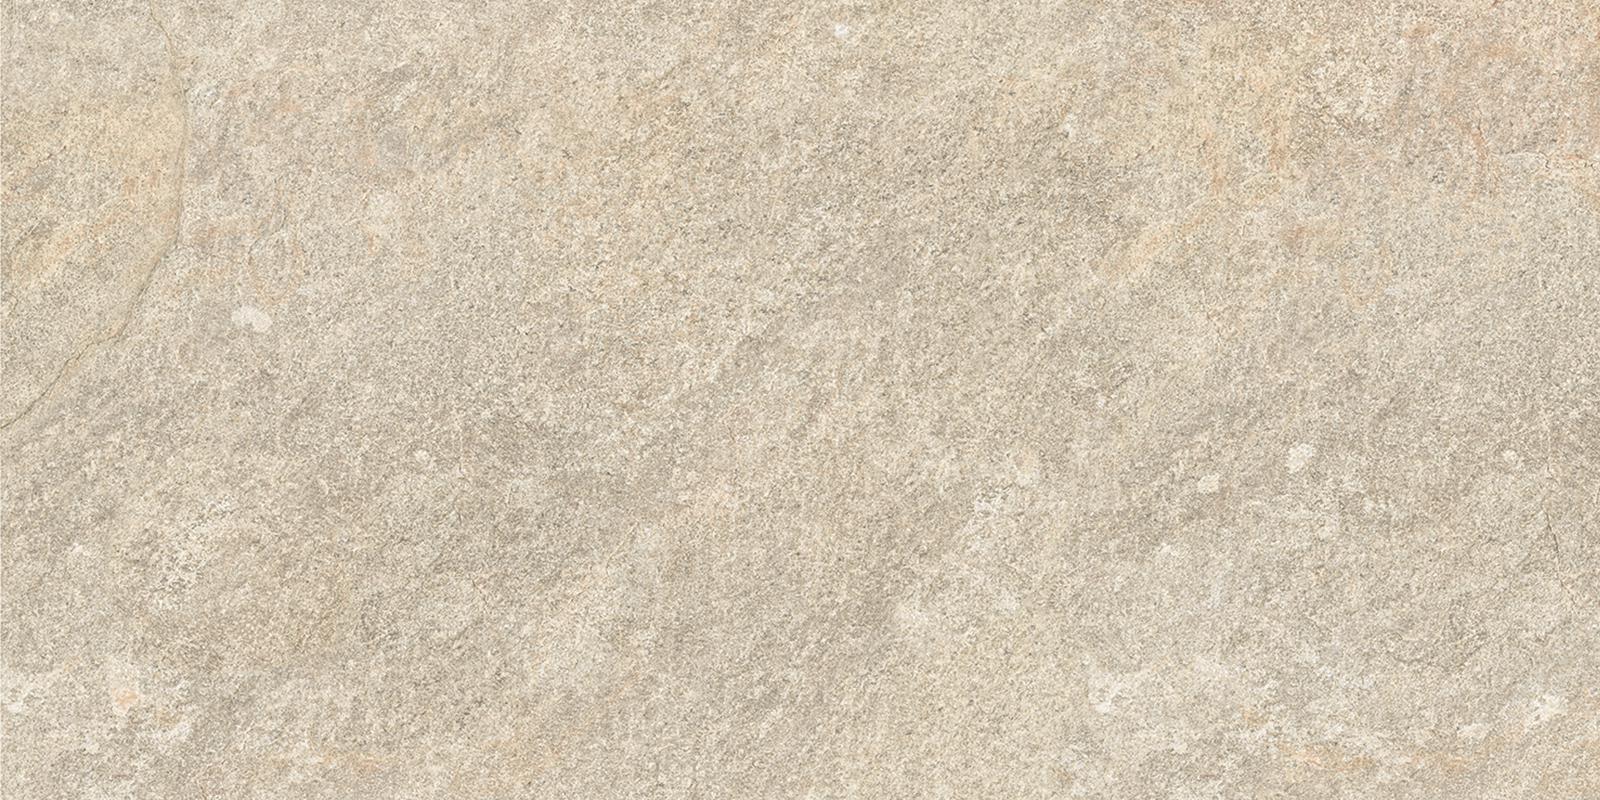 Ergon Oros Stone Sand Tecnica 30x60